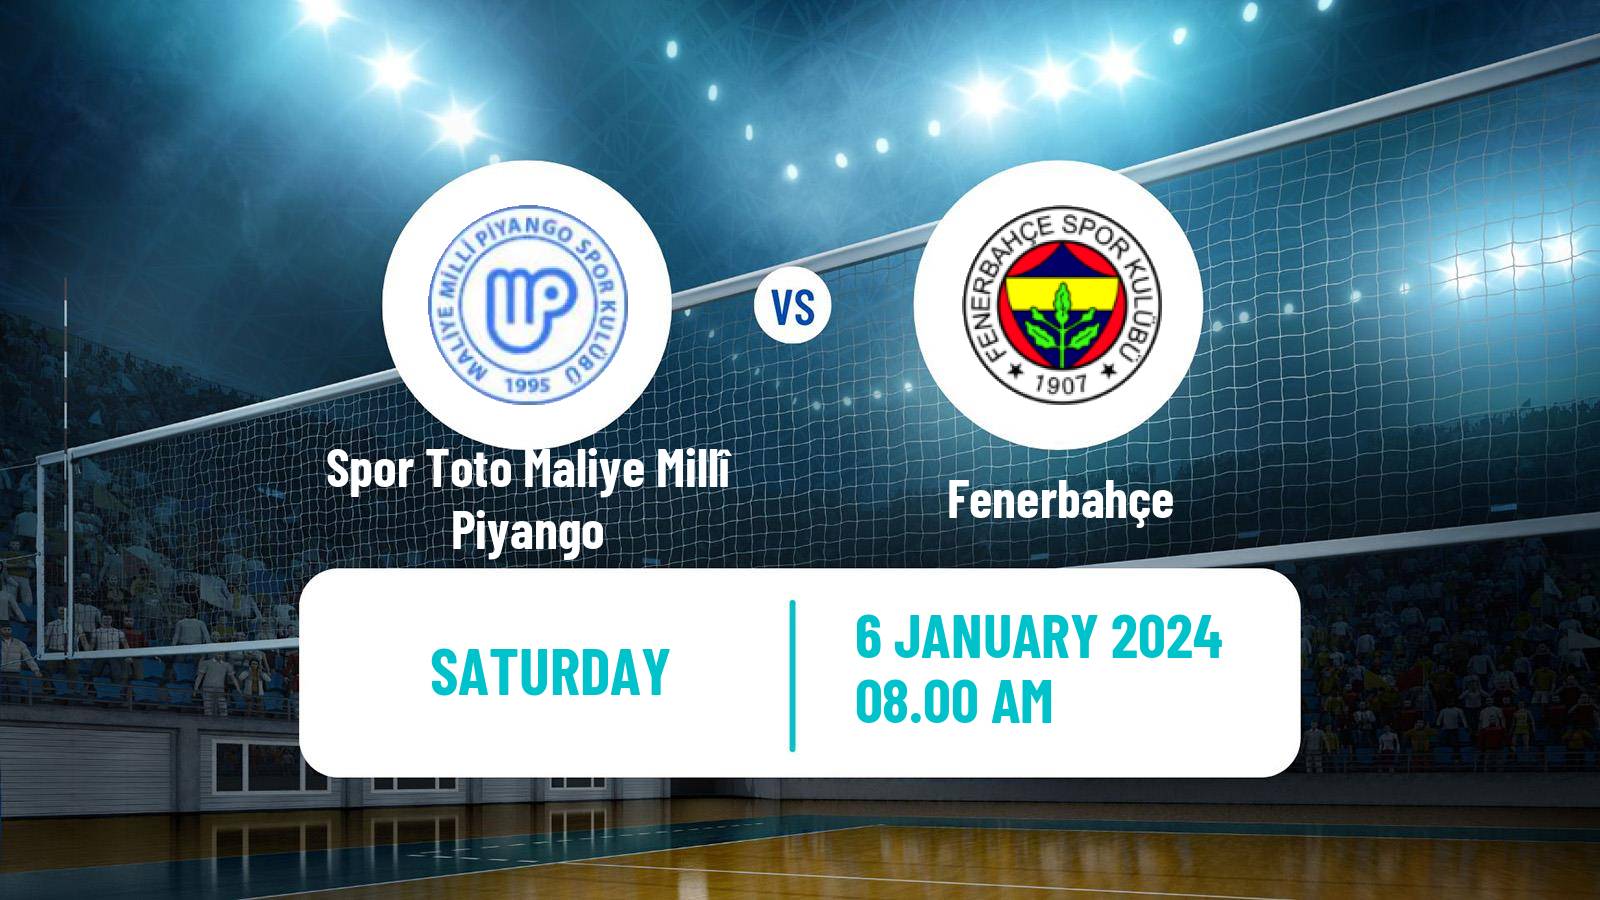 Volleyball Turkish Efeler Ligi Volleyball Spor Toto Maliye Millî Piyango - Fenerbahçe